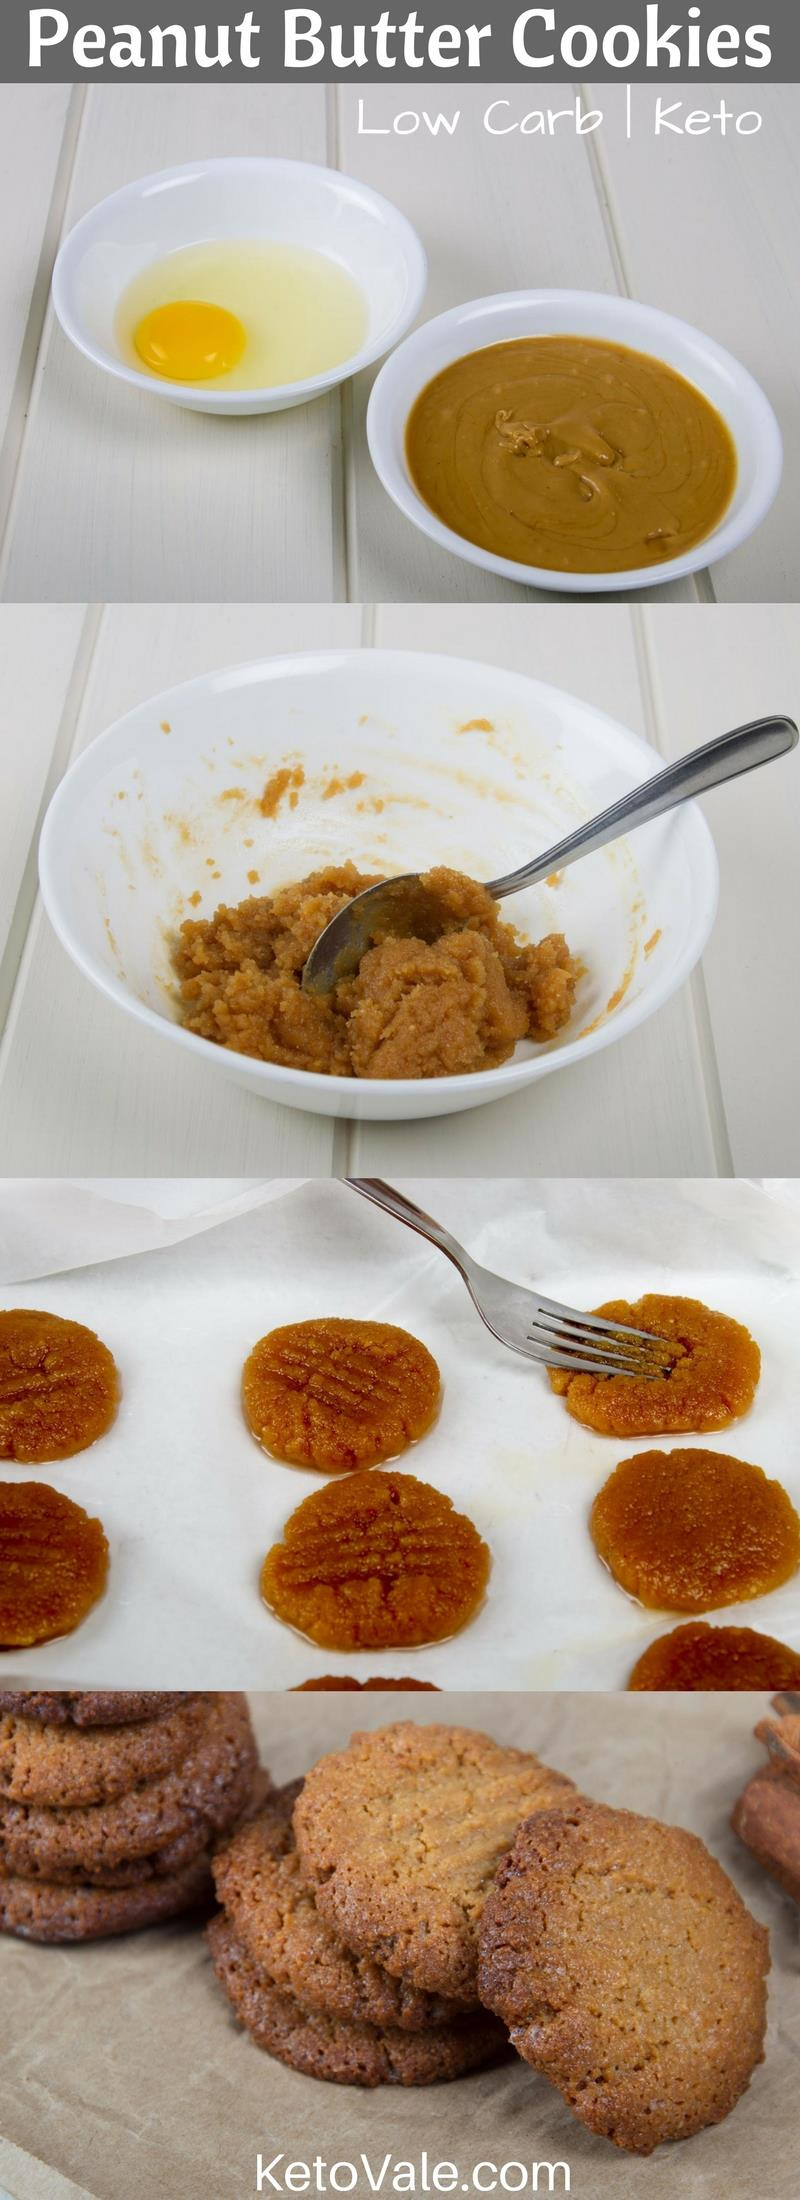 Powdered Peanut Butter Recipes Low Carb
 Peanut Butter Cookies Low Carb Recipe